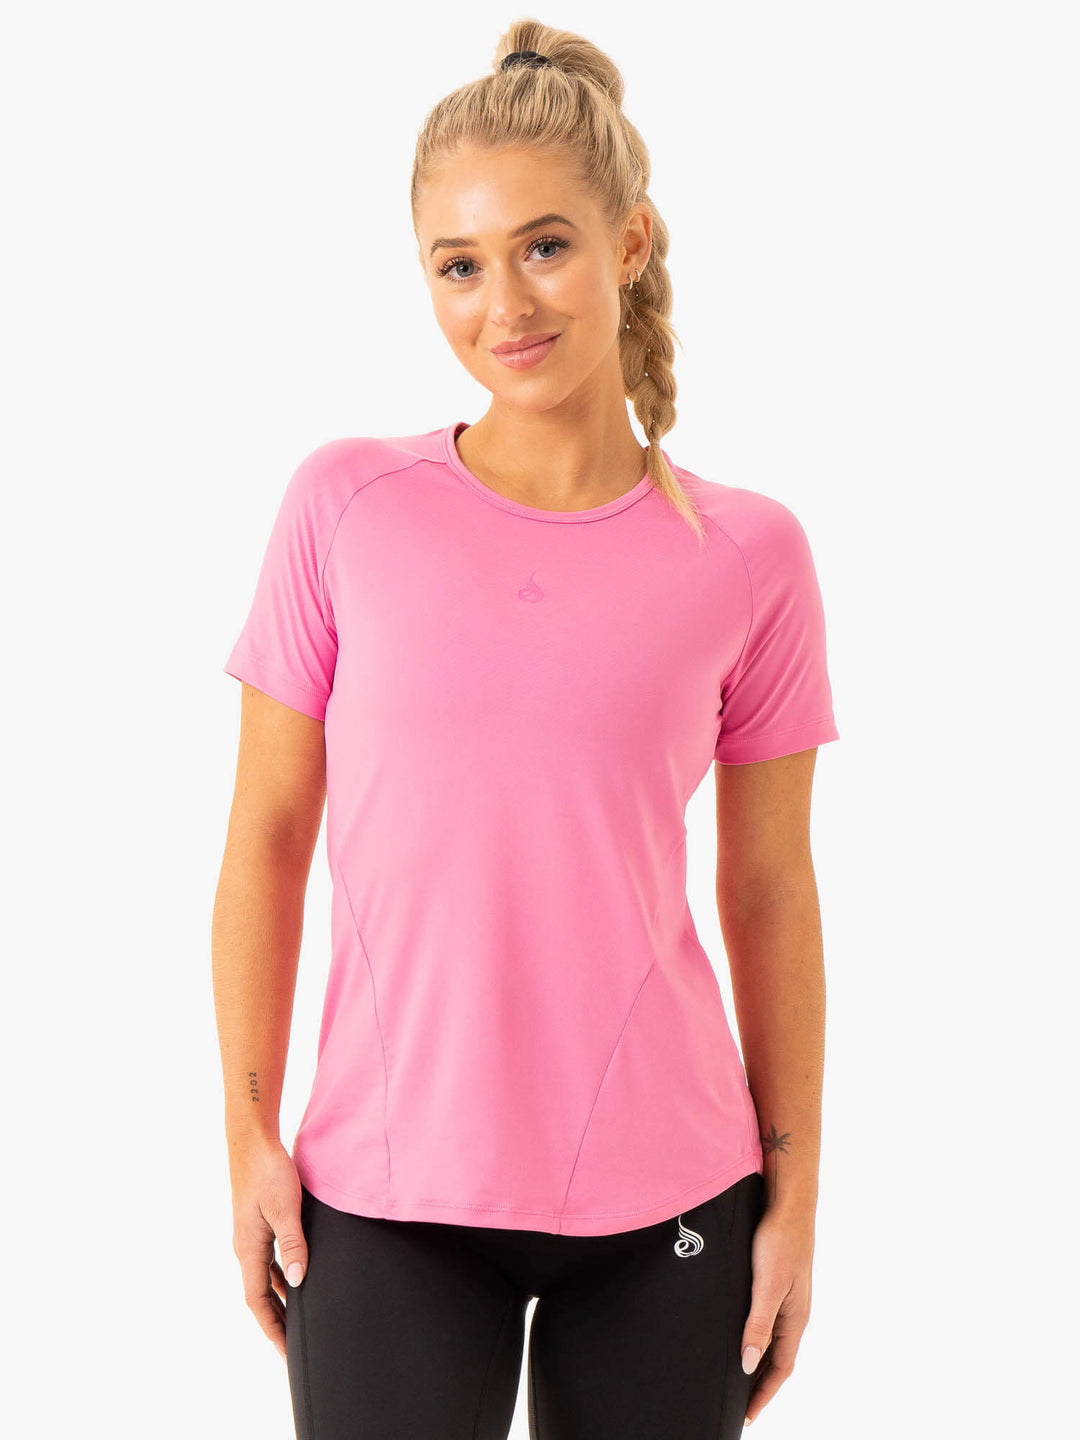 Level Up Training T-Shirt - Pink Clothing Ryderwear 